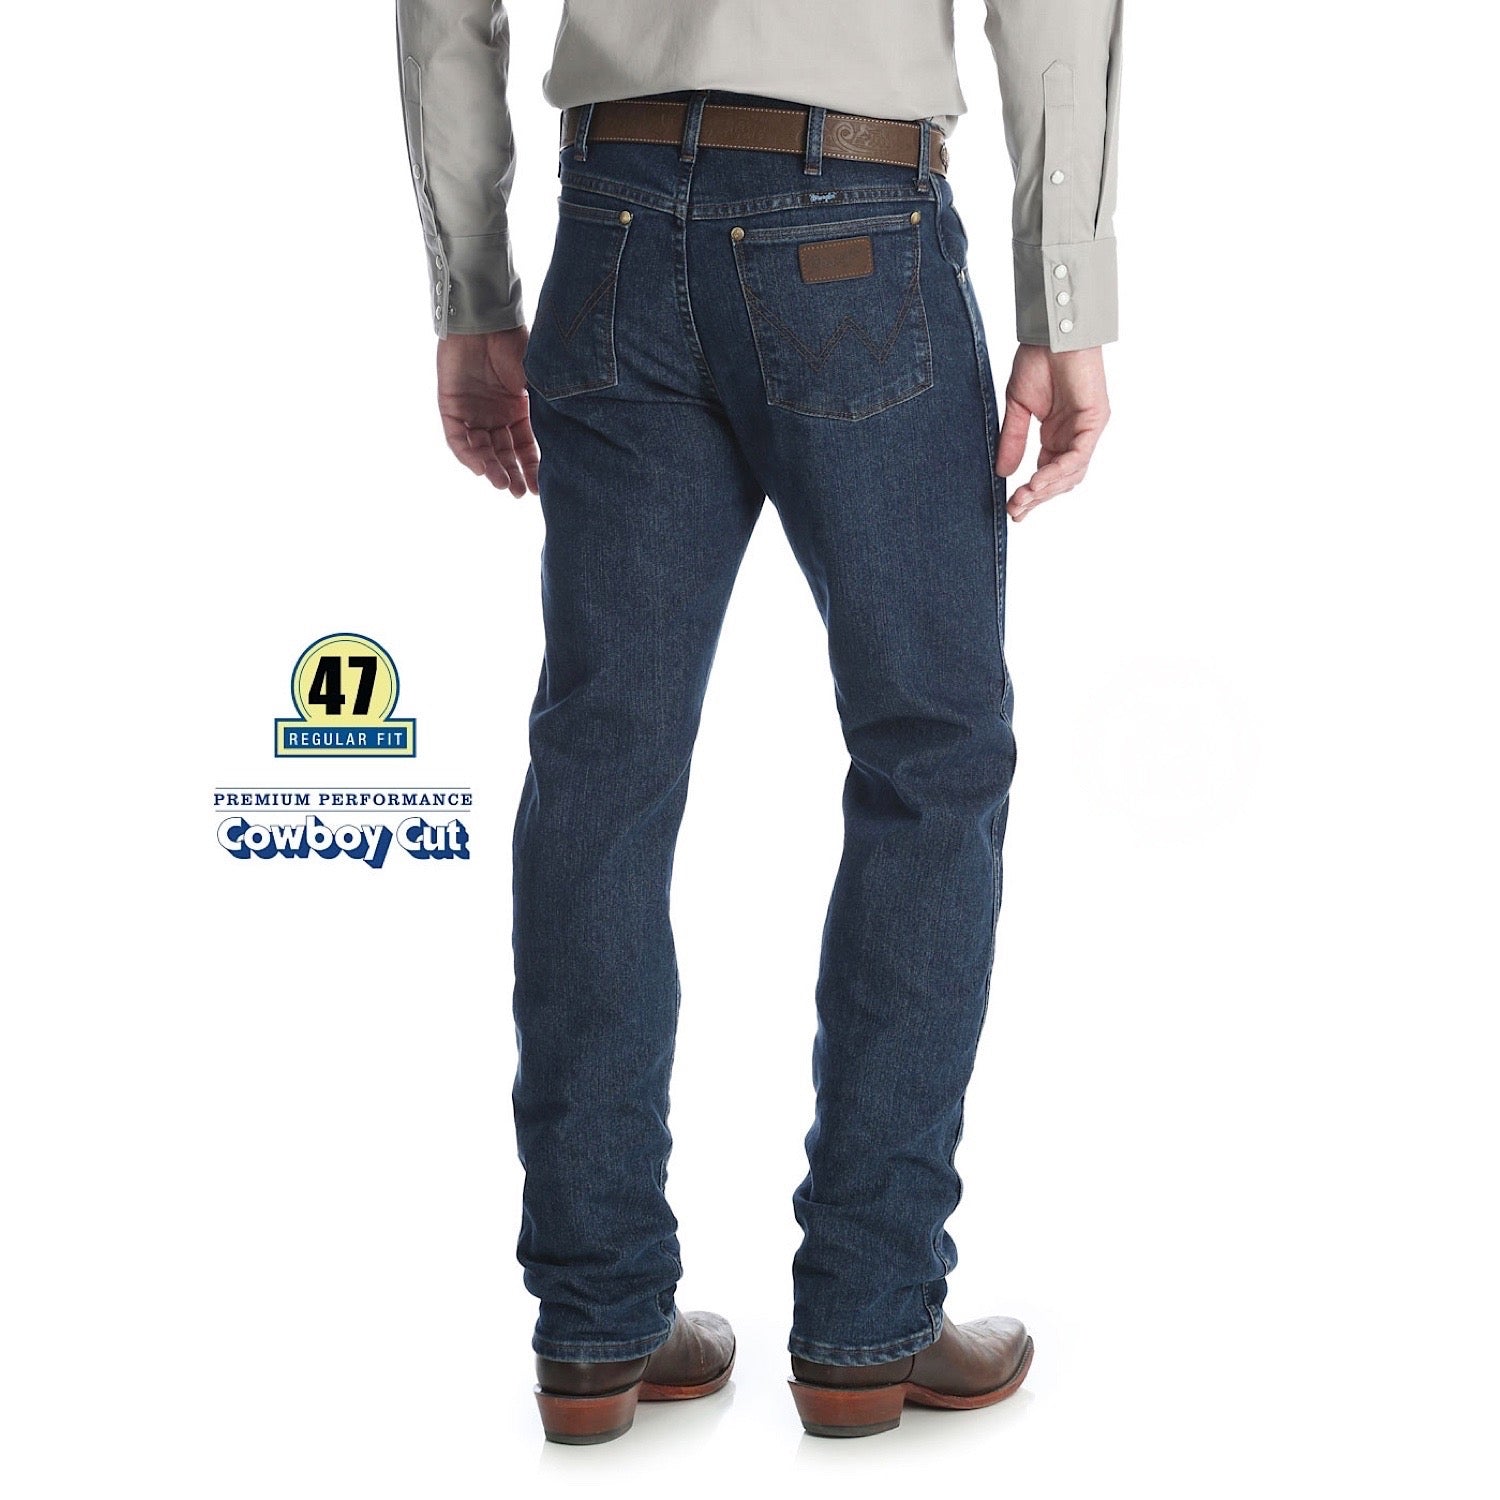 Buy Wrangler Mens Premium Performance Cowboy Cut CV Regular Fit Jean Midni  - The Stable Door